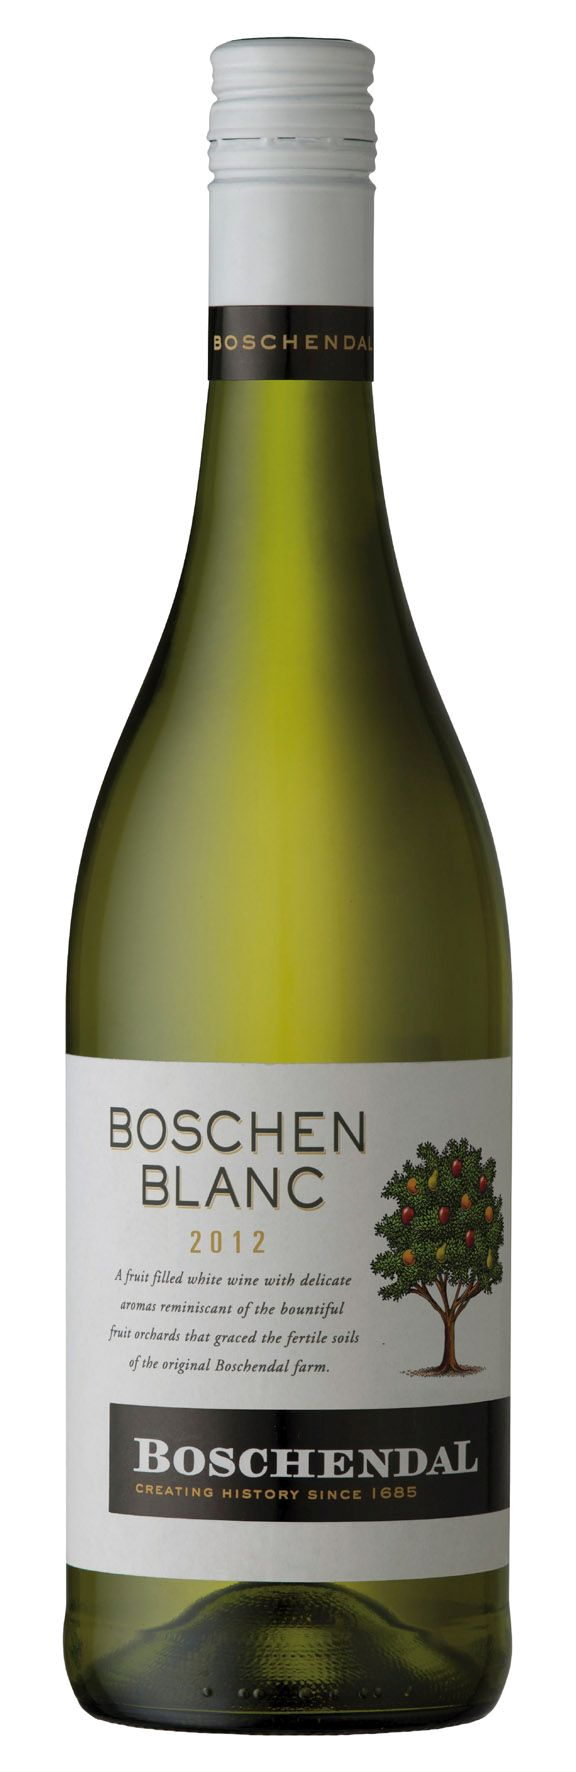 Boschendal Classics Boschen Blanc